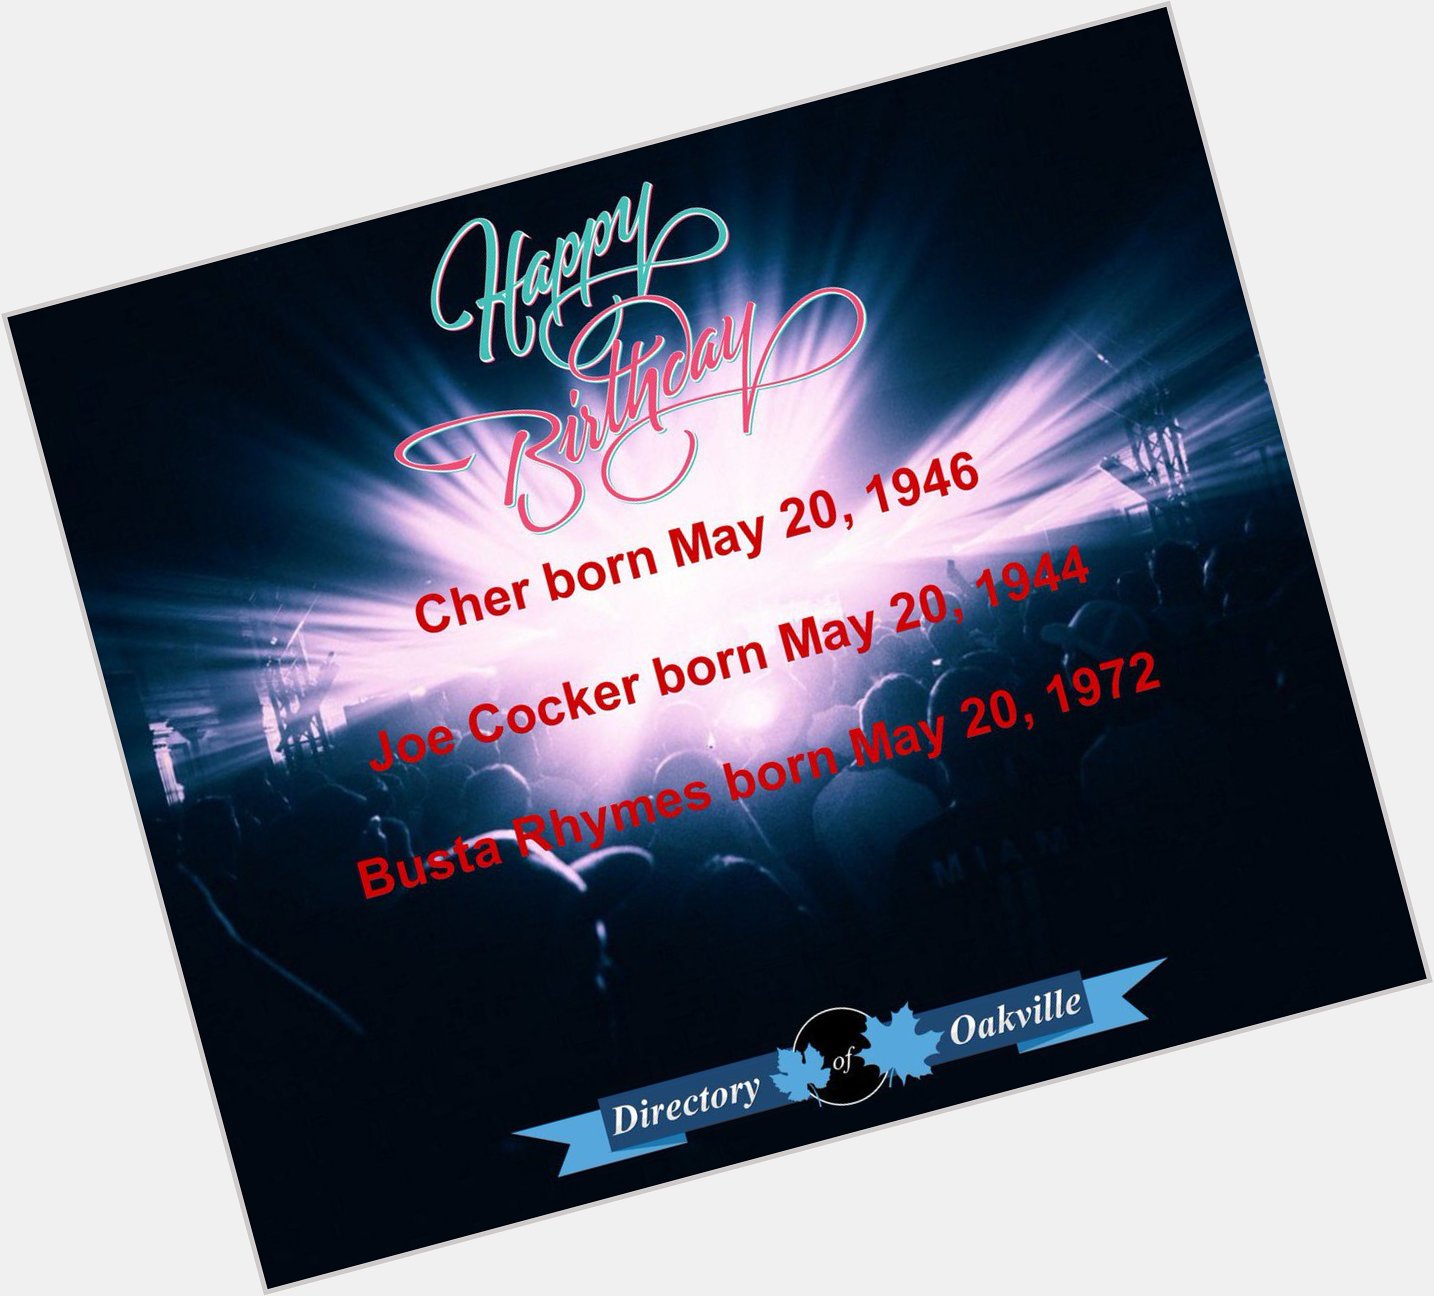 HAPPY BIRTHDAY!
Cher born May 20, 1946
Joe Cocker born May 20, 1944
Busta Rhymes born May 20, 1972 